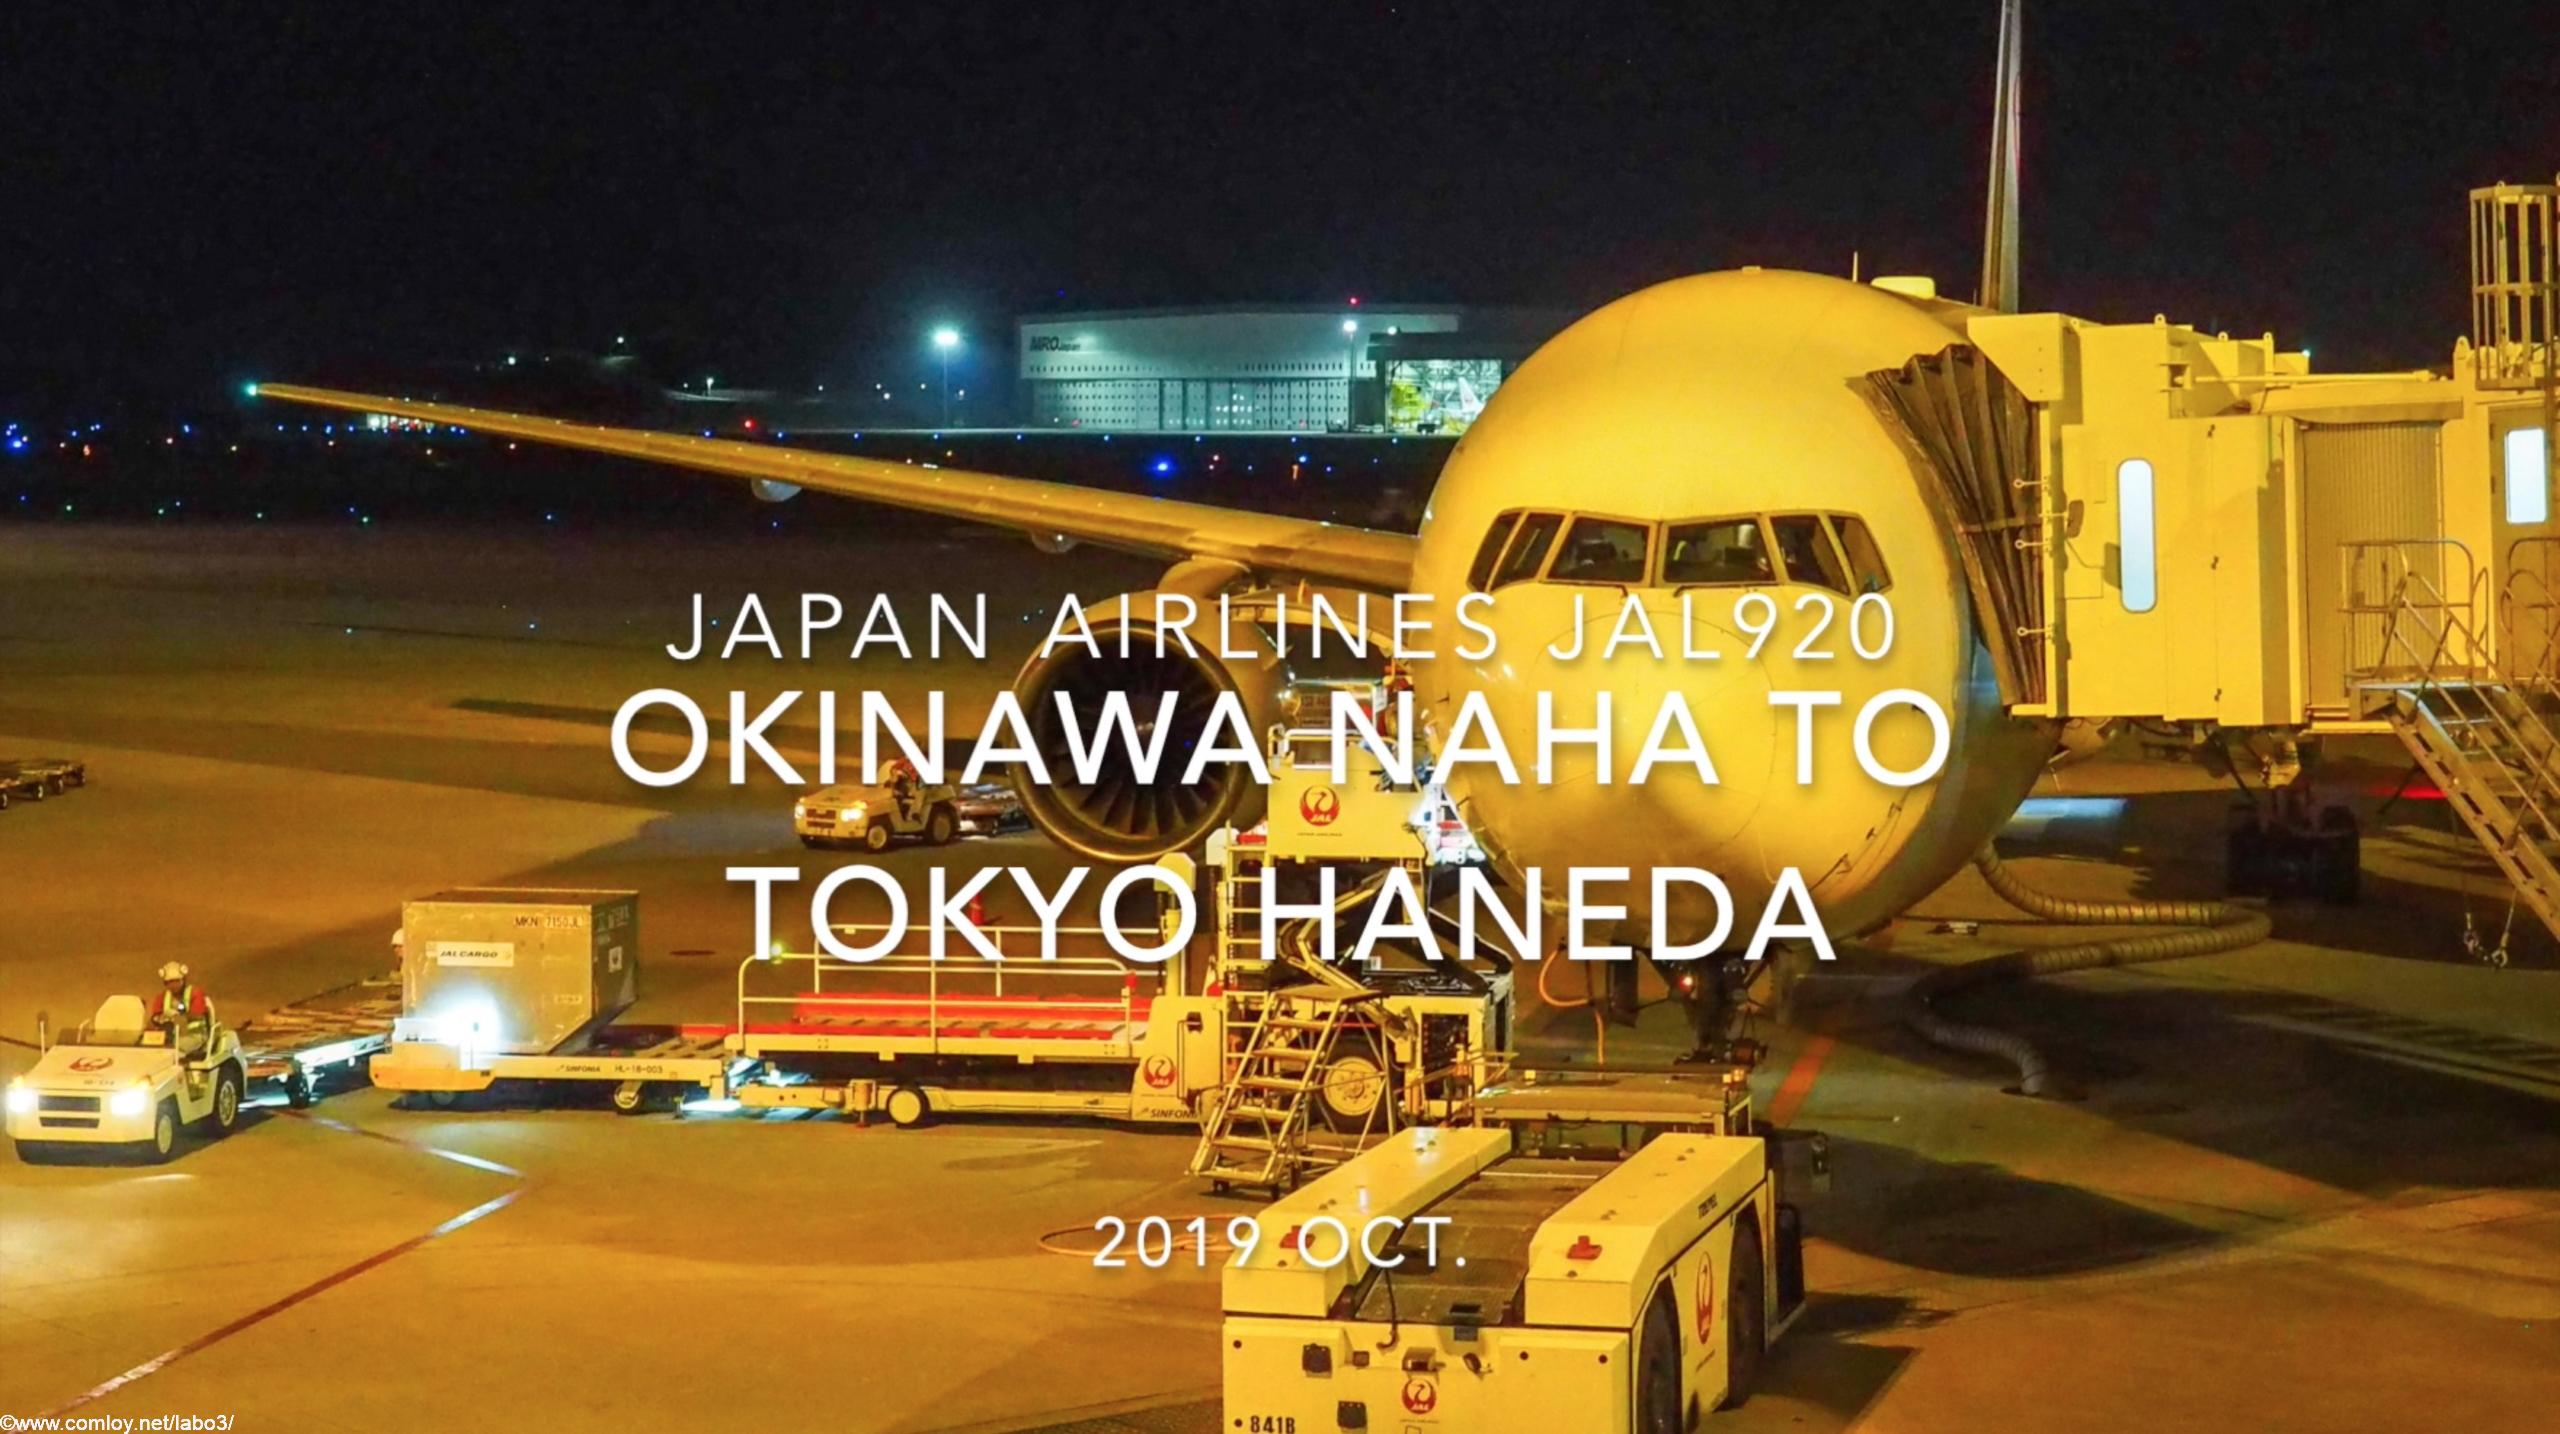 【Flight Report】2019 Oct Japan airlines JAL920 OKINAWA NAHA TO TOKYO HANEDA 日本航空 那覇 - 羽田 搭乗記